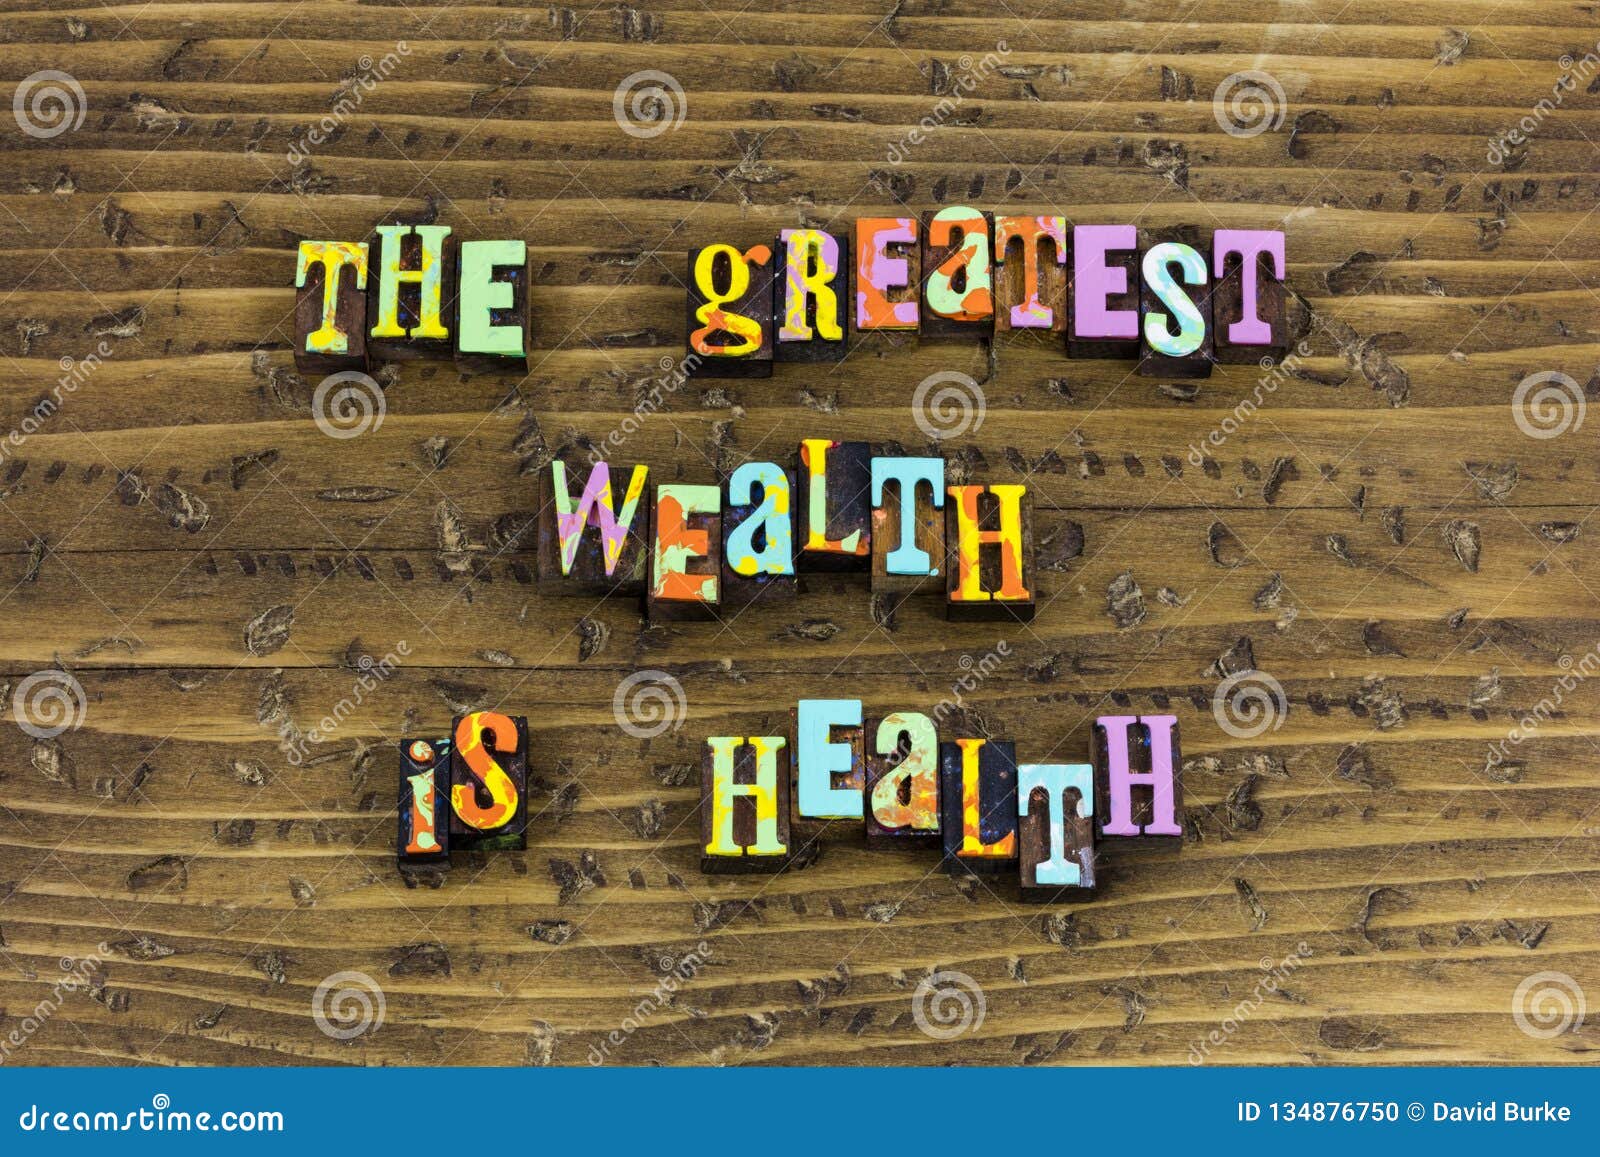 wealth personal health healthcare healthy security wealthy life